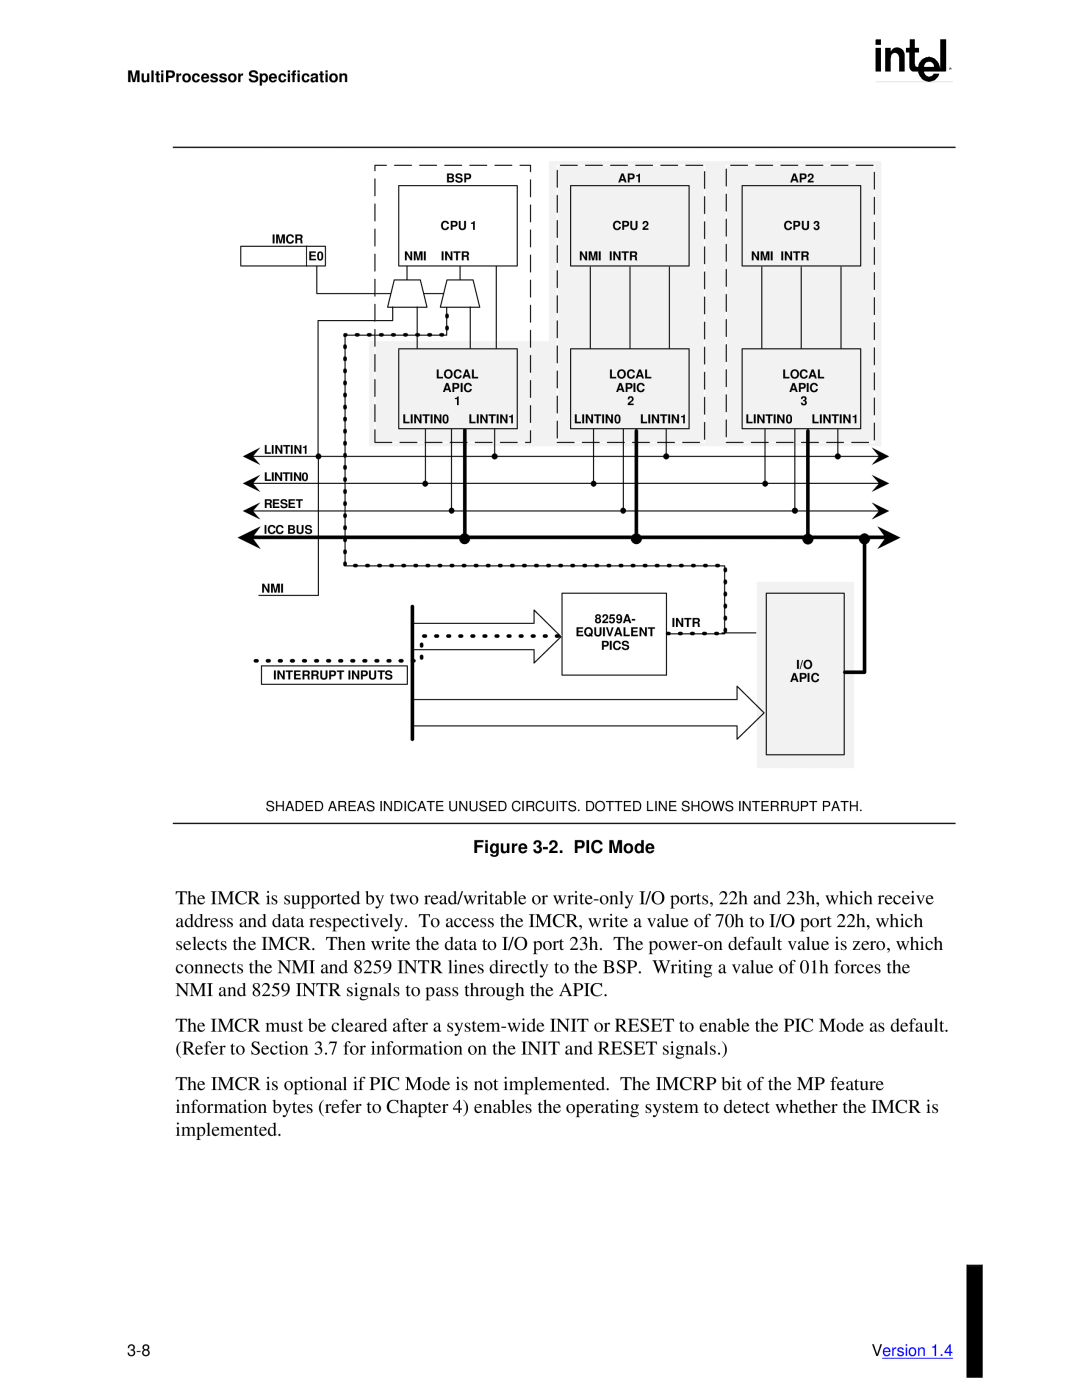 Intel MultiProcessor manual 2.PIC Mode 